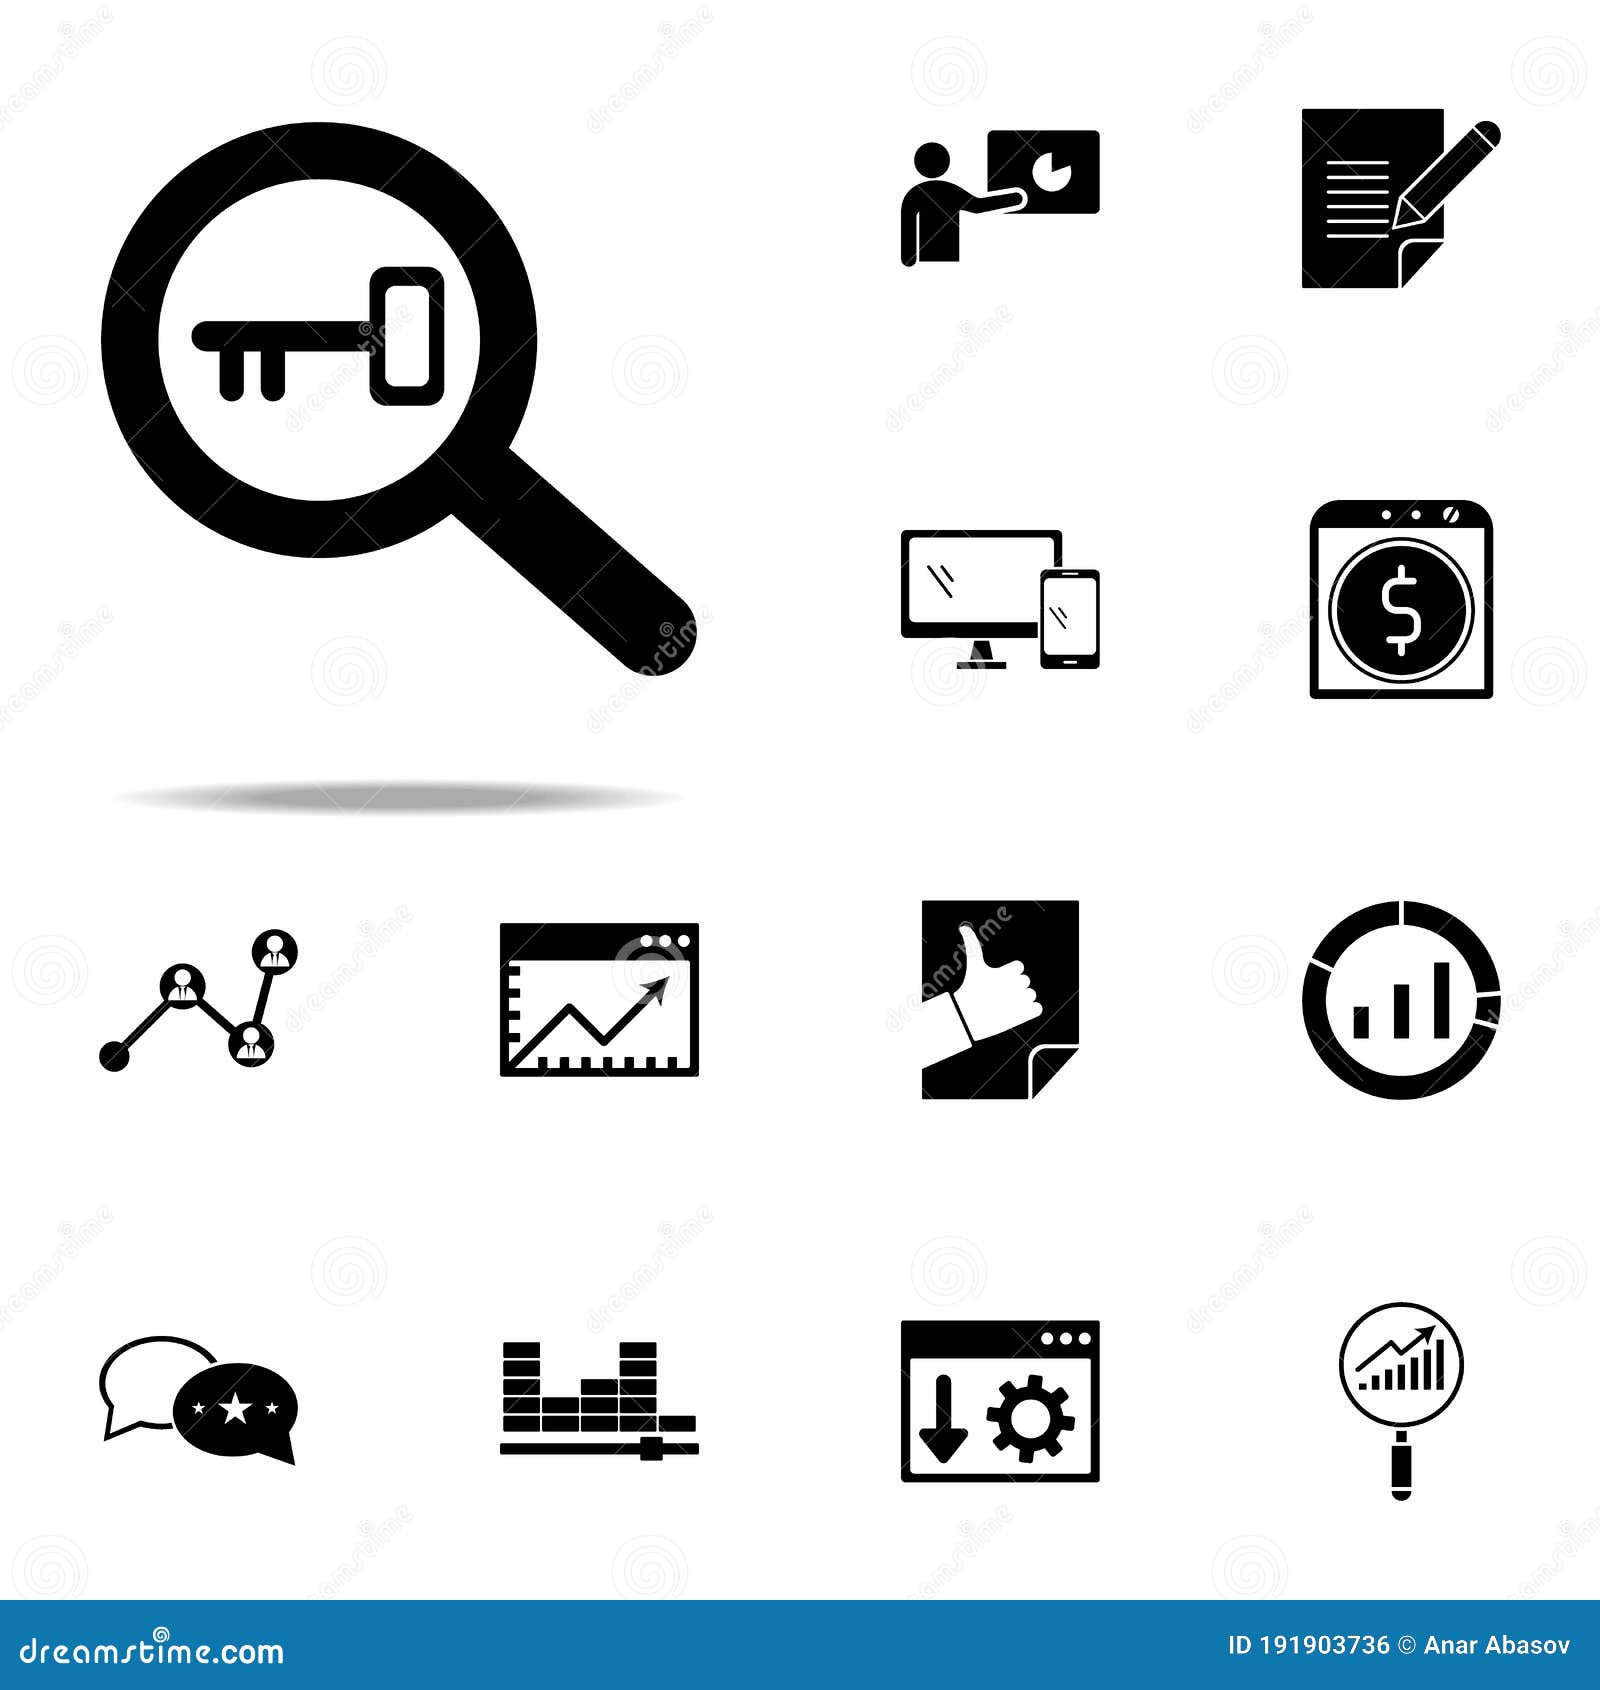 Keyword Research Icon Seo Development Icons Universal Set For Web And Mobile Stock Illustration Illustration Of Keyword Media